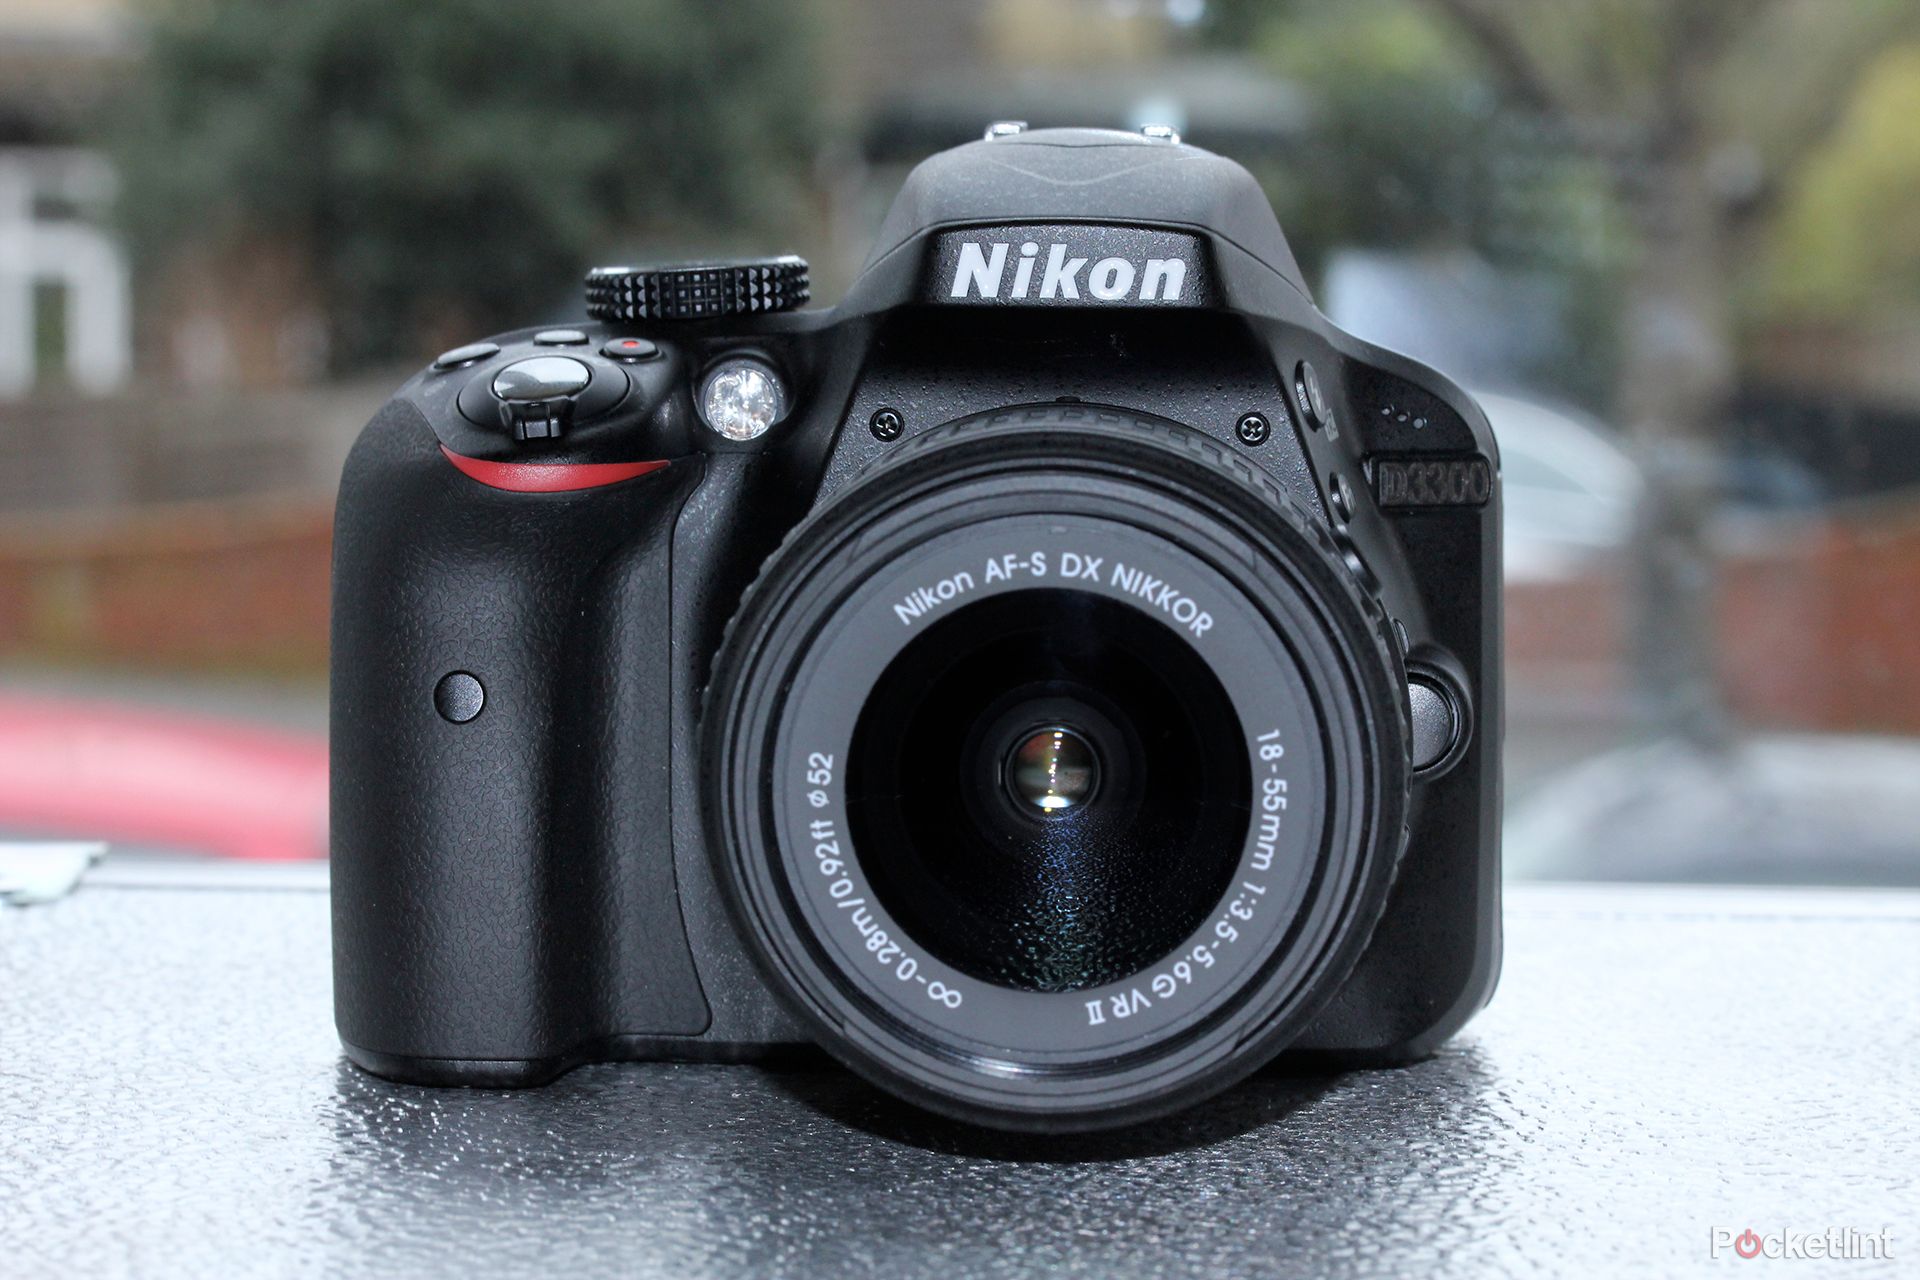 Appareil photo Nikon D3300 avec objectif AF-S NIKKOR 18-55mm